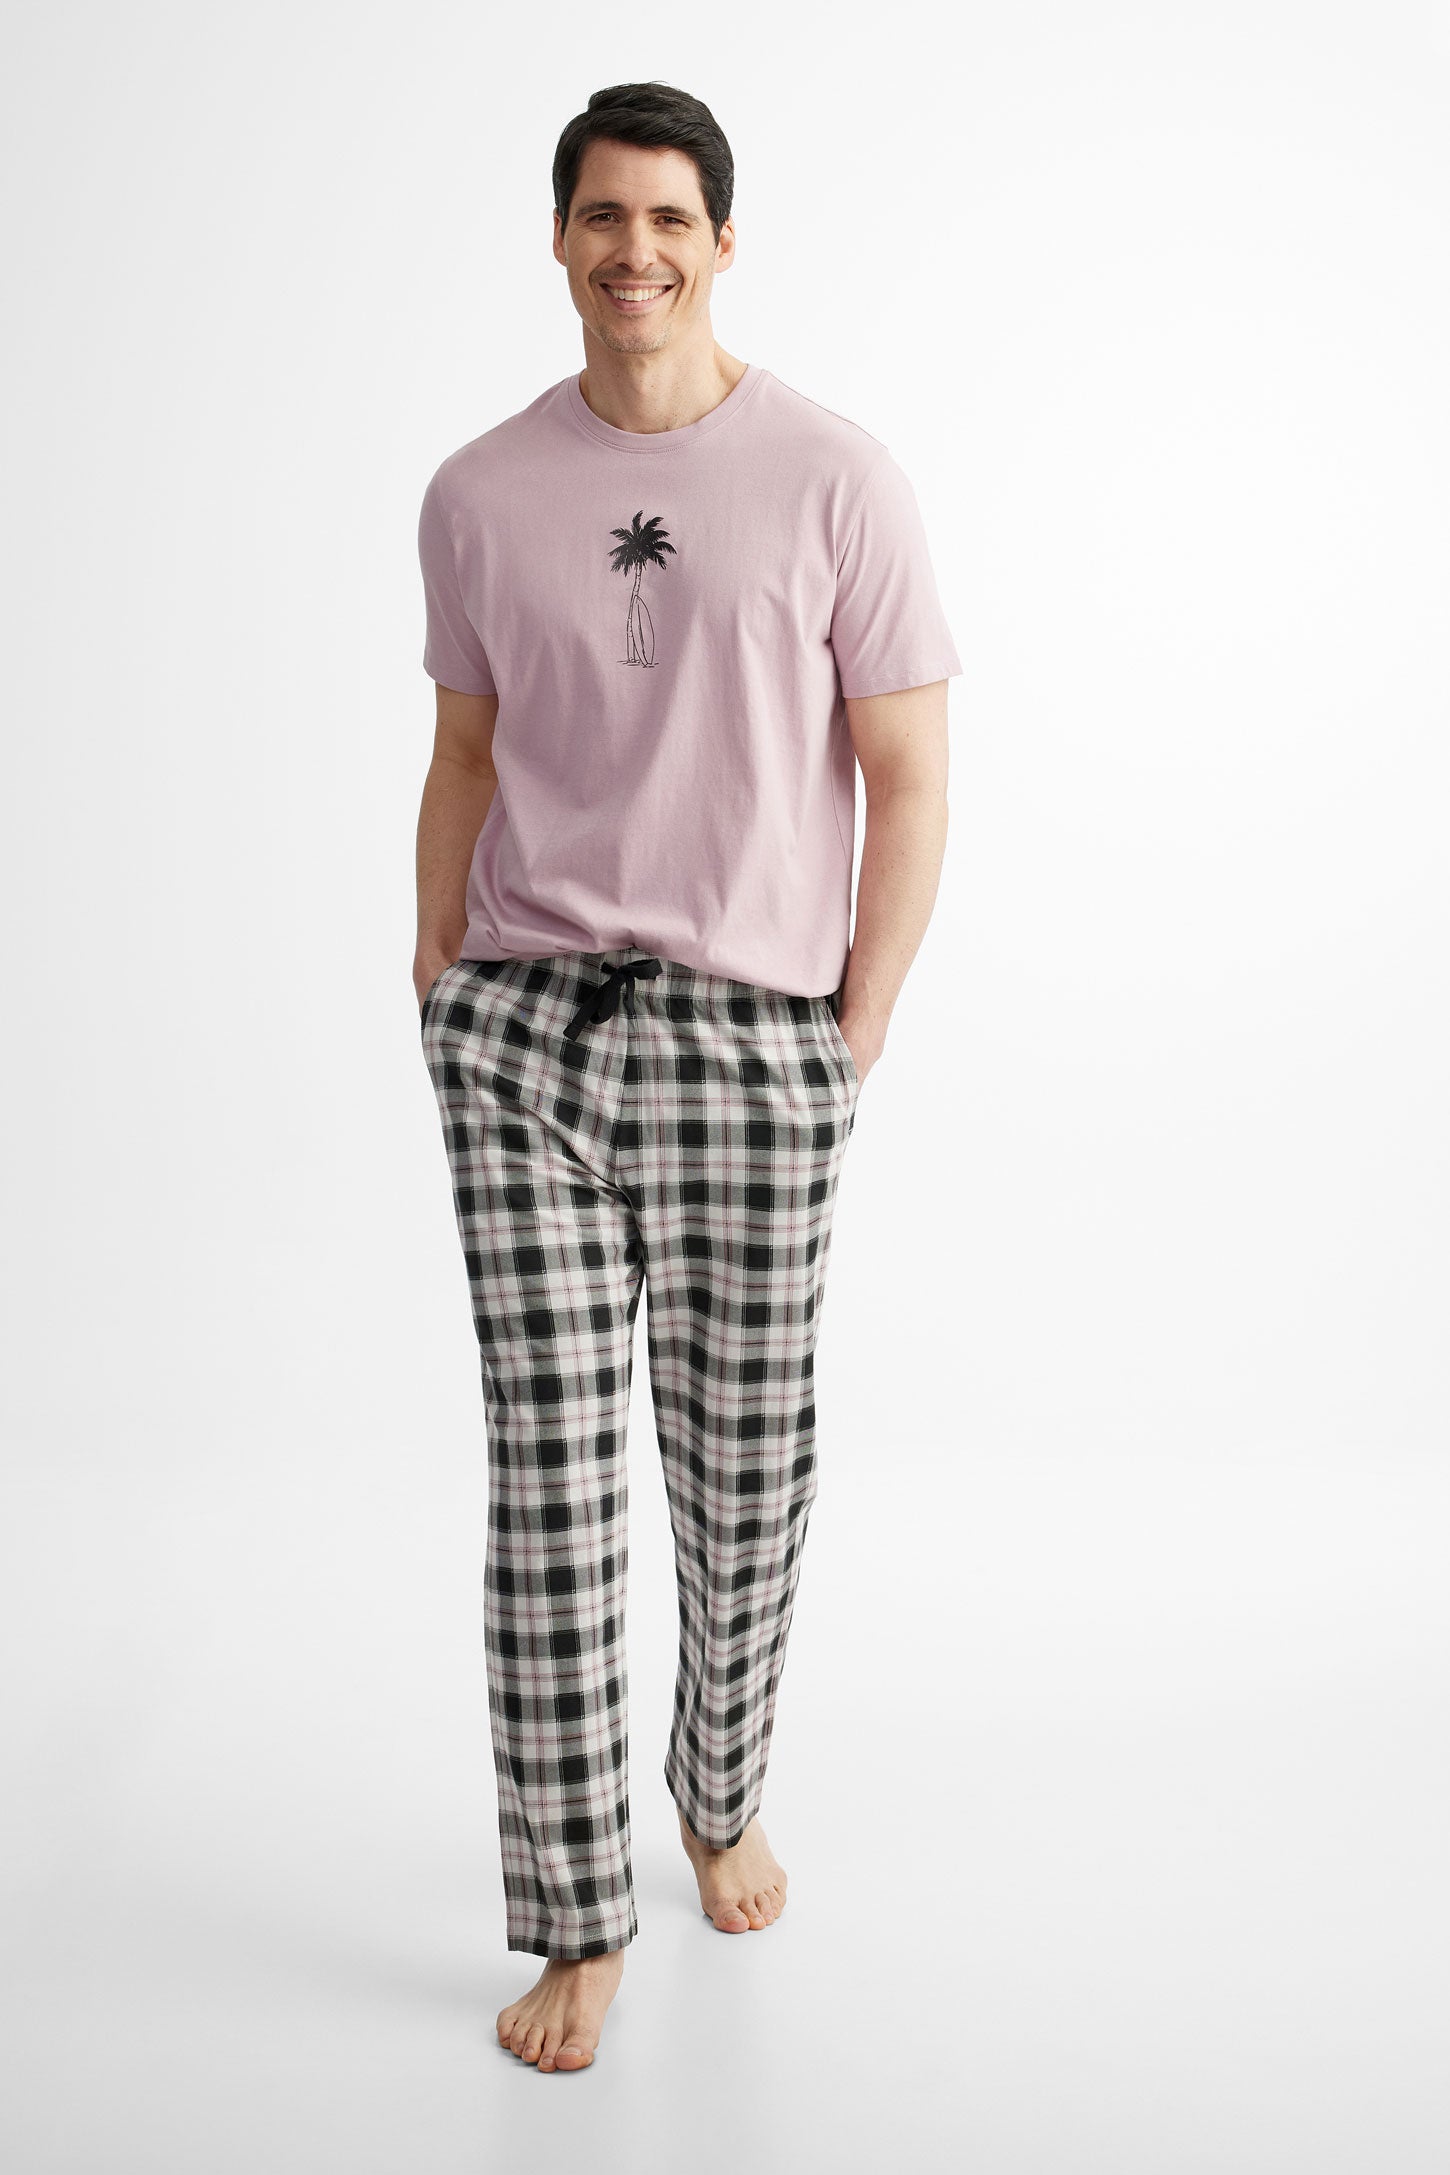 Pantalon pyjama en coton, 2/40$ - Homme && CHARBON/MULTI